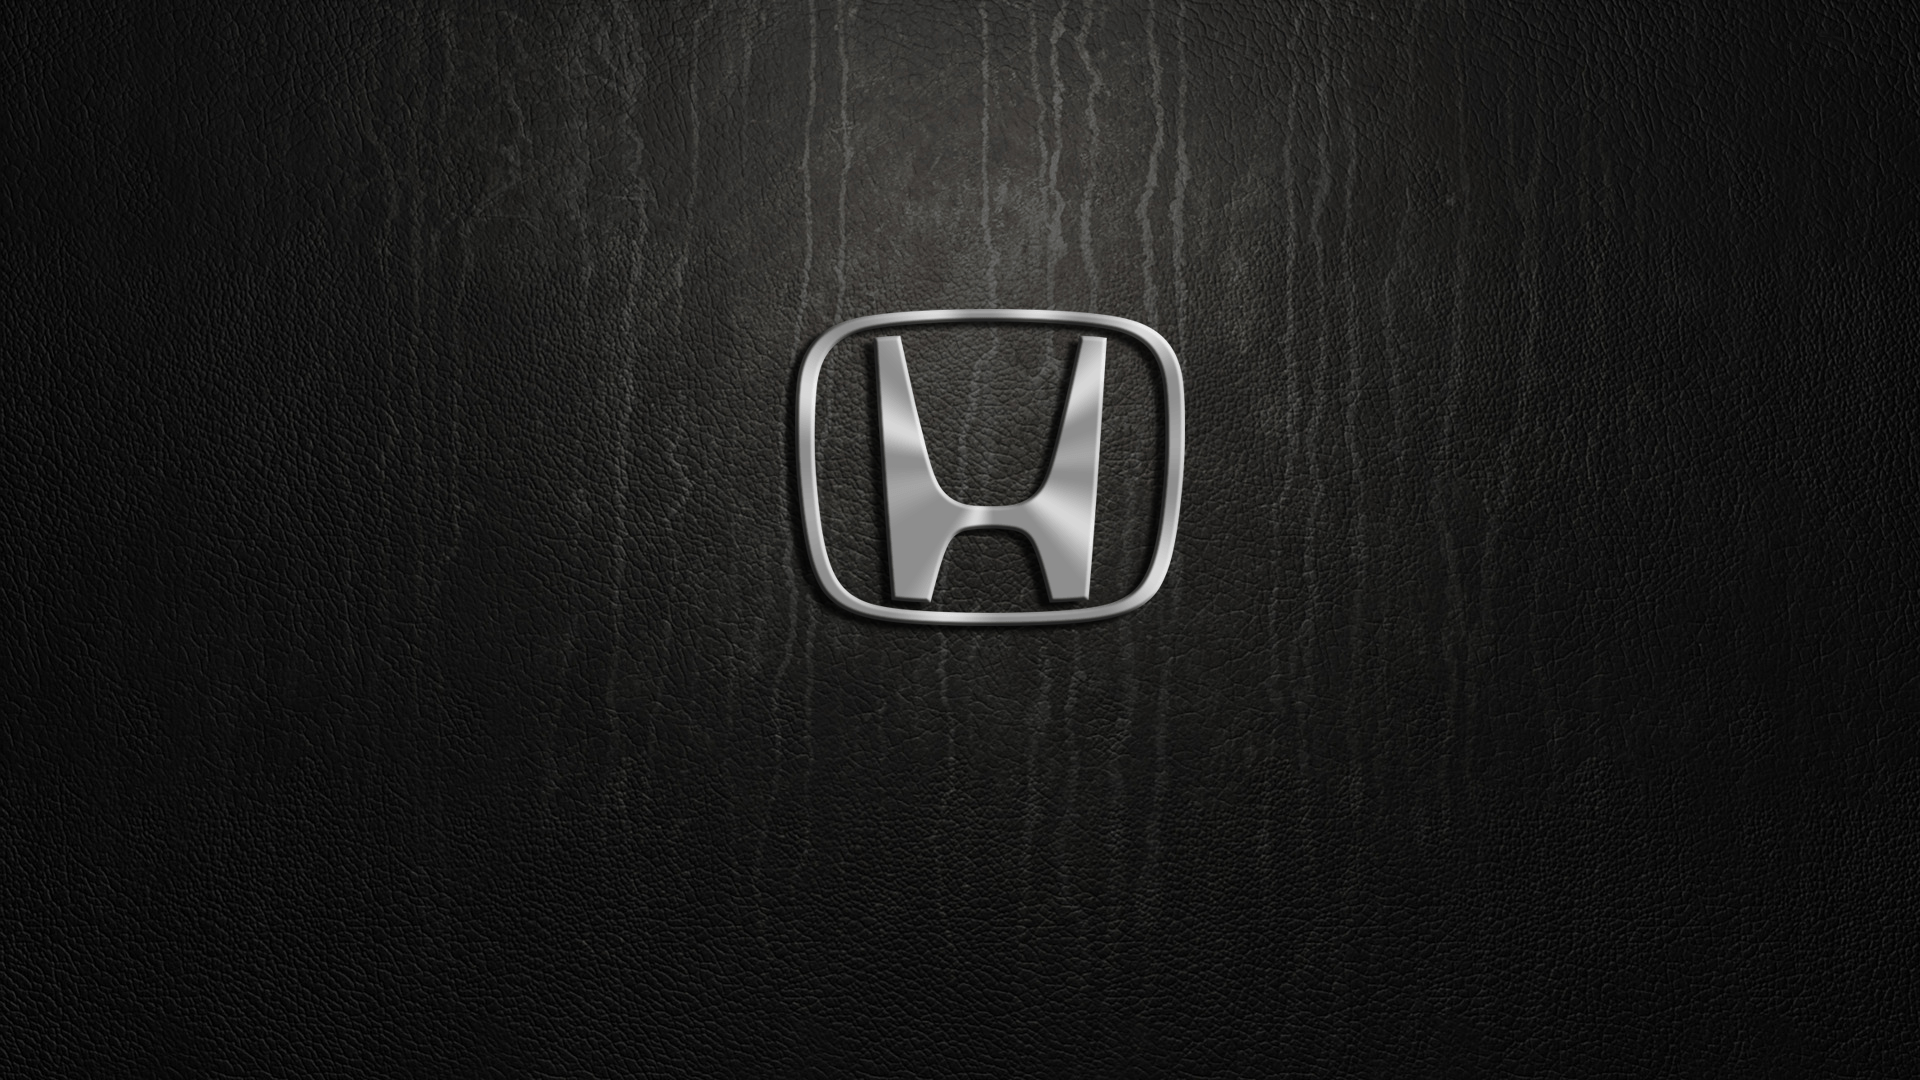 Honda Wallpapers Top Free Honda Backgrounds Wallpaperaccess